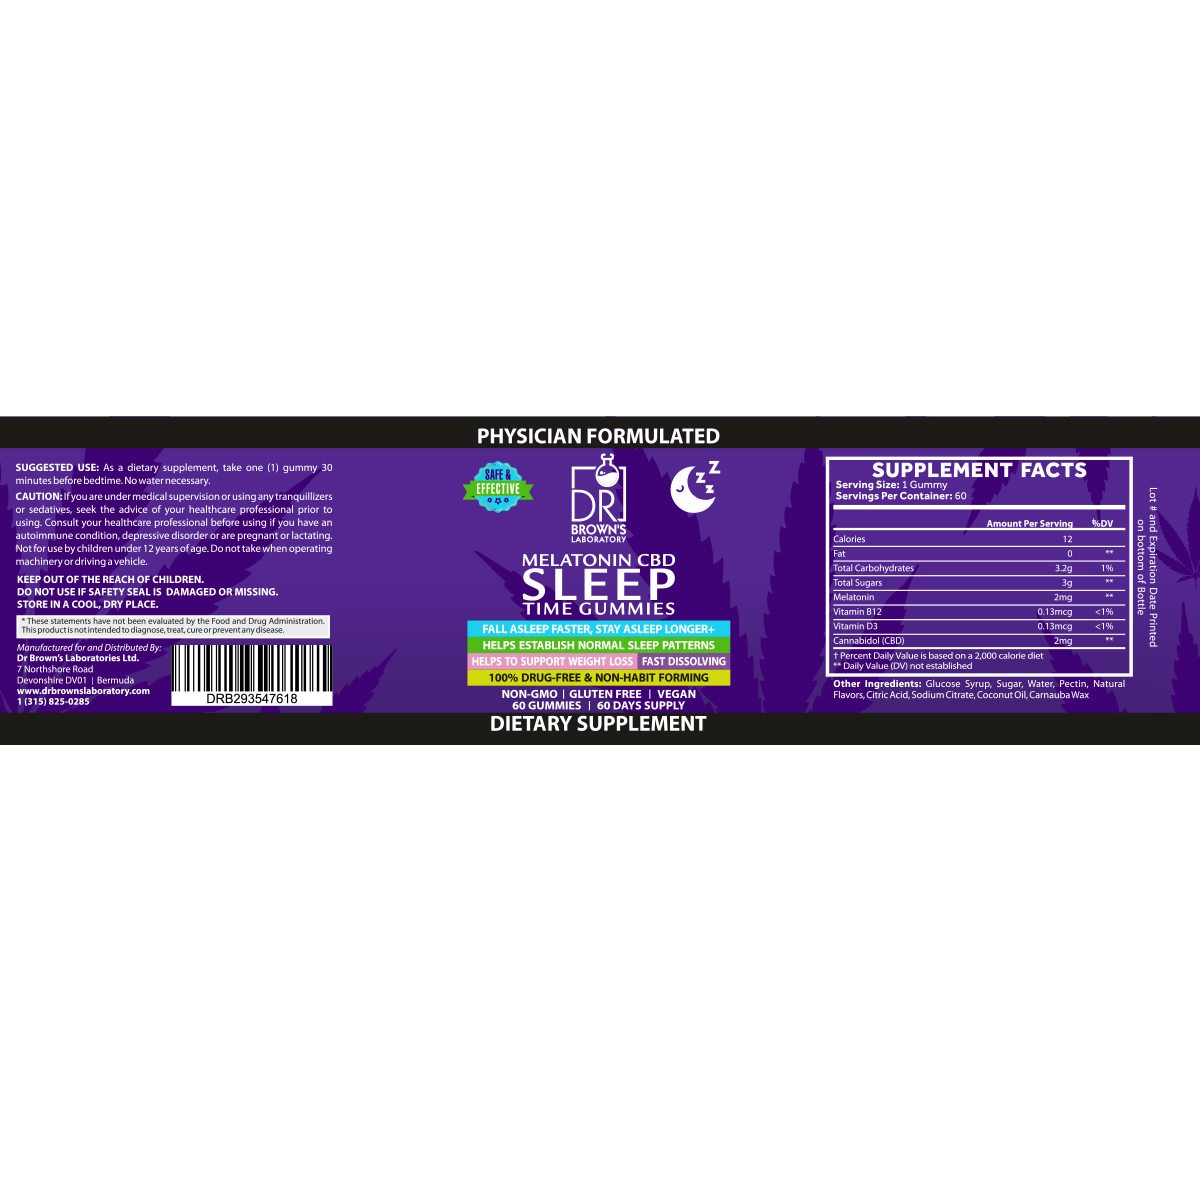 Melatonin CBD Sleep Time Gummies-  (60 Day Supply)